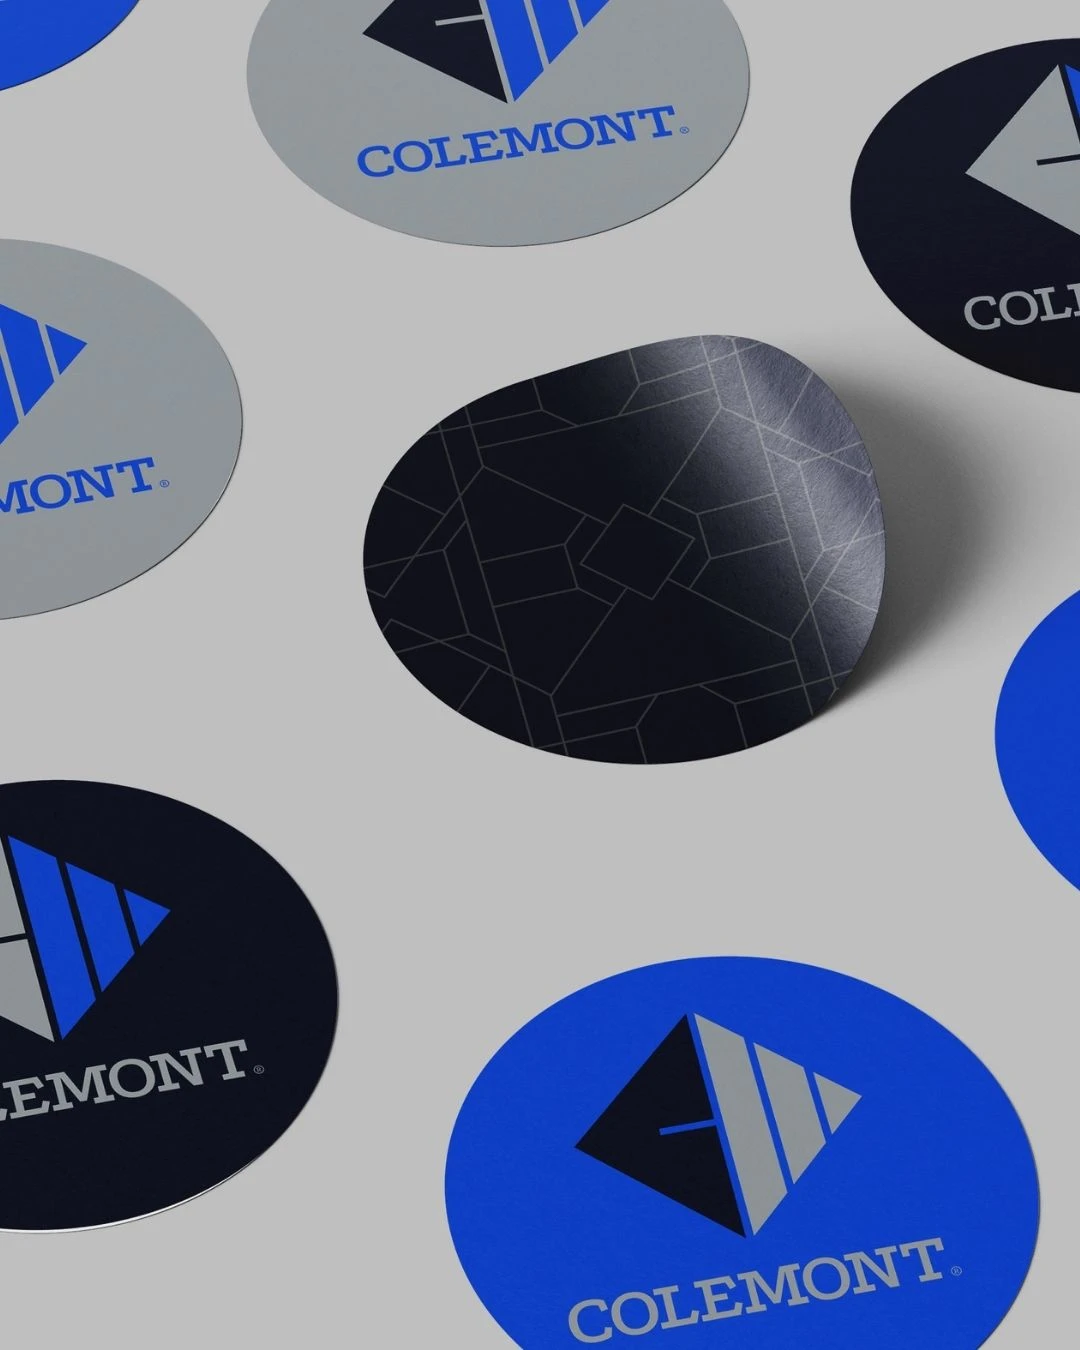 Colemont - Insurance Company Rebranding